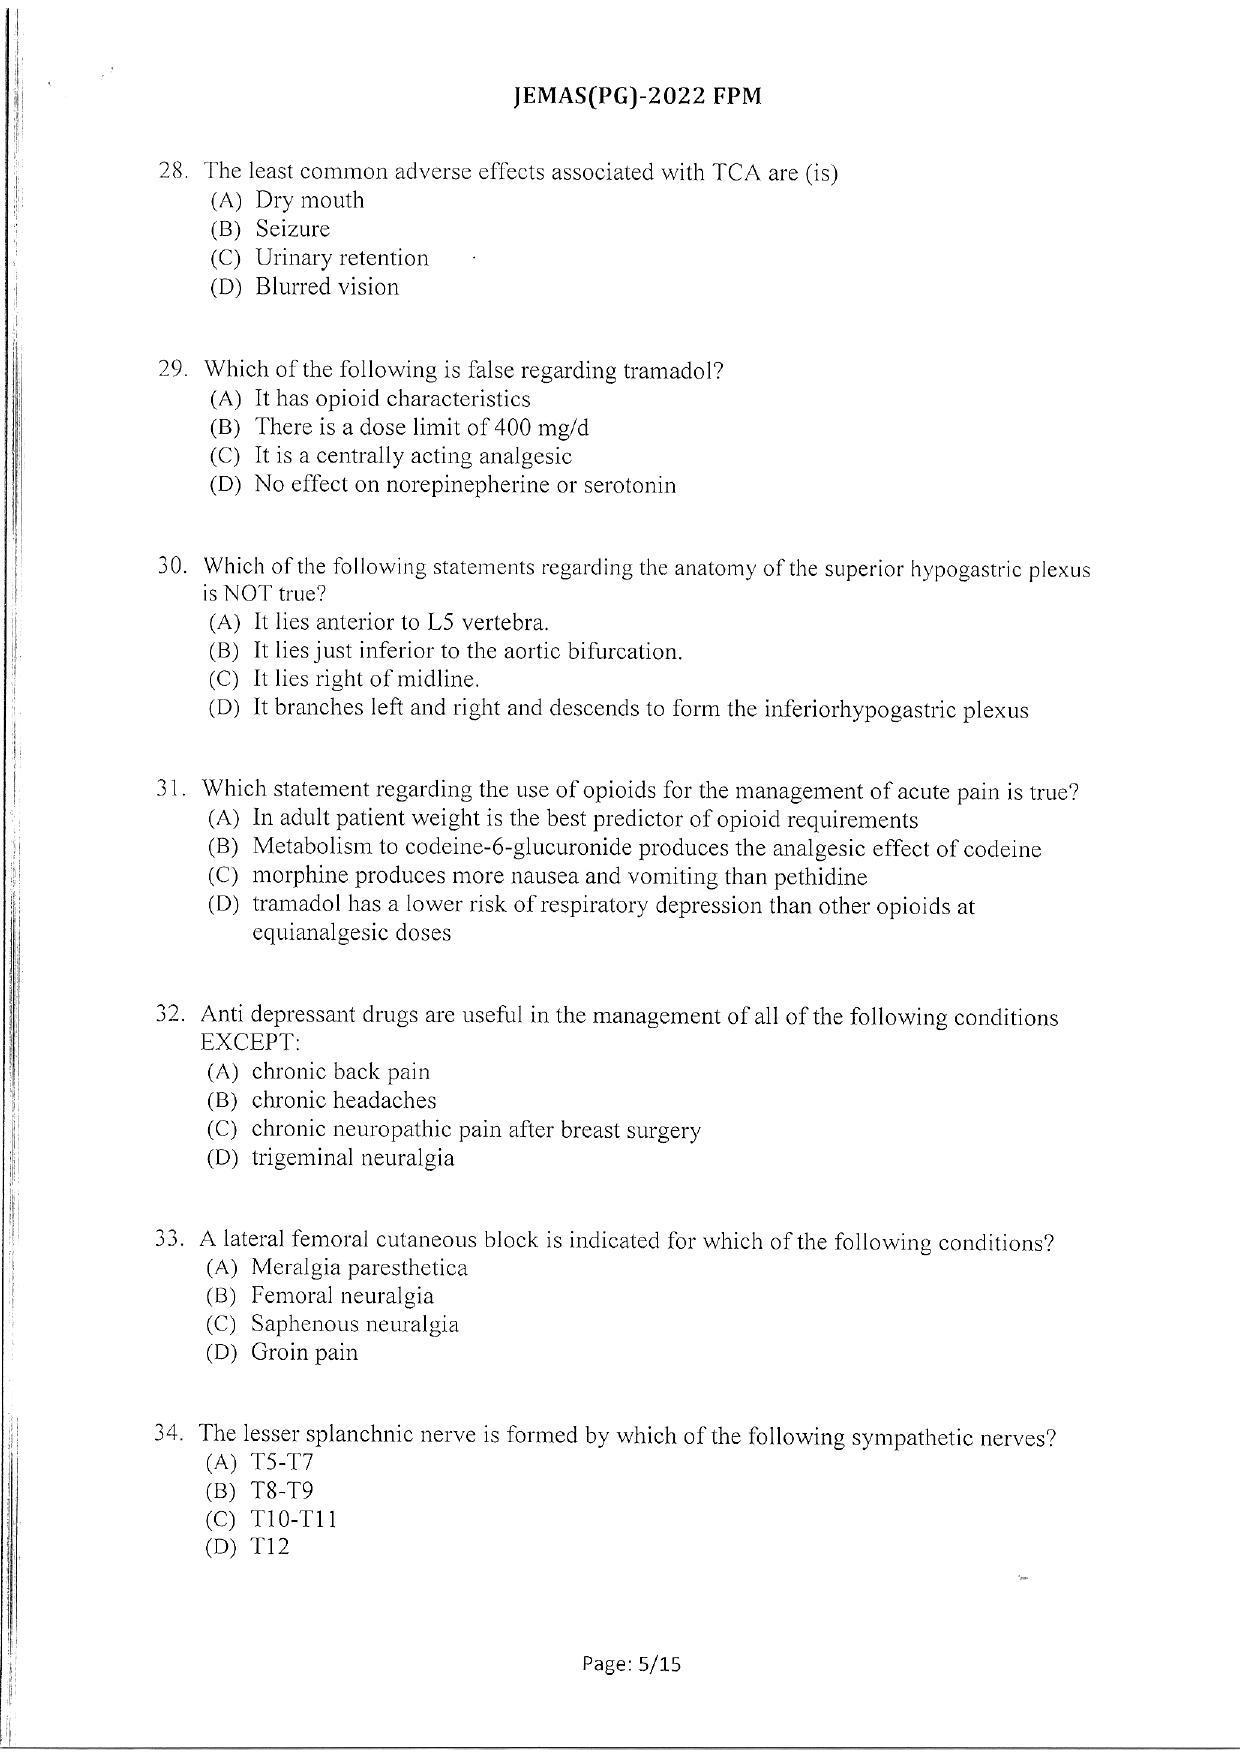 WBJEEB JEMAS (PG) 2022 FPM Question Paper - Page 7